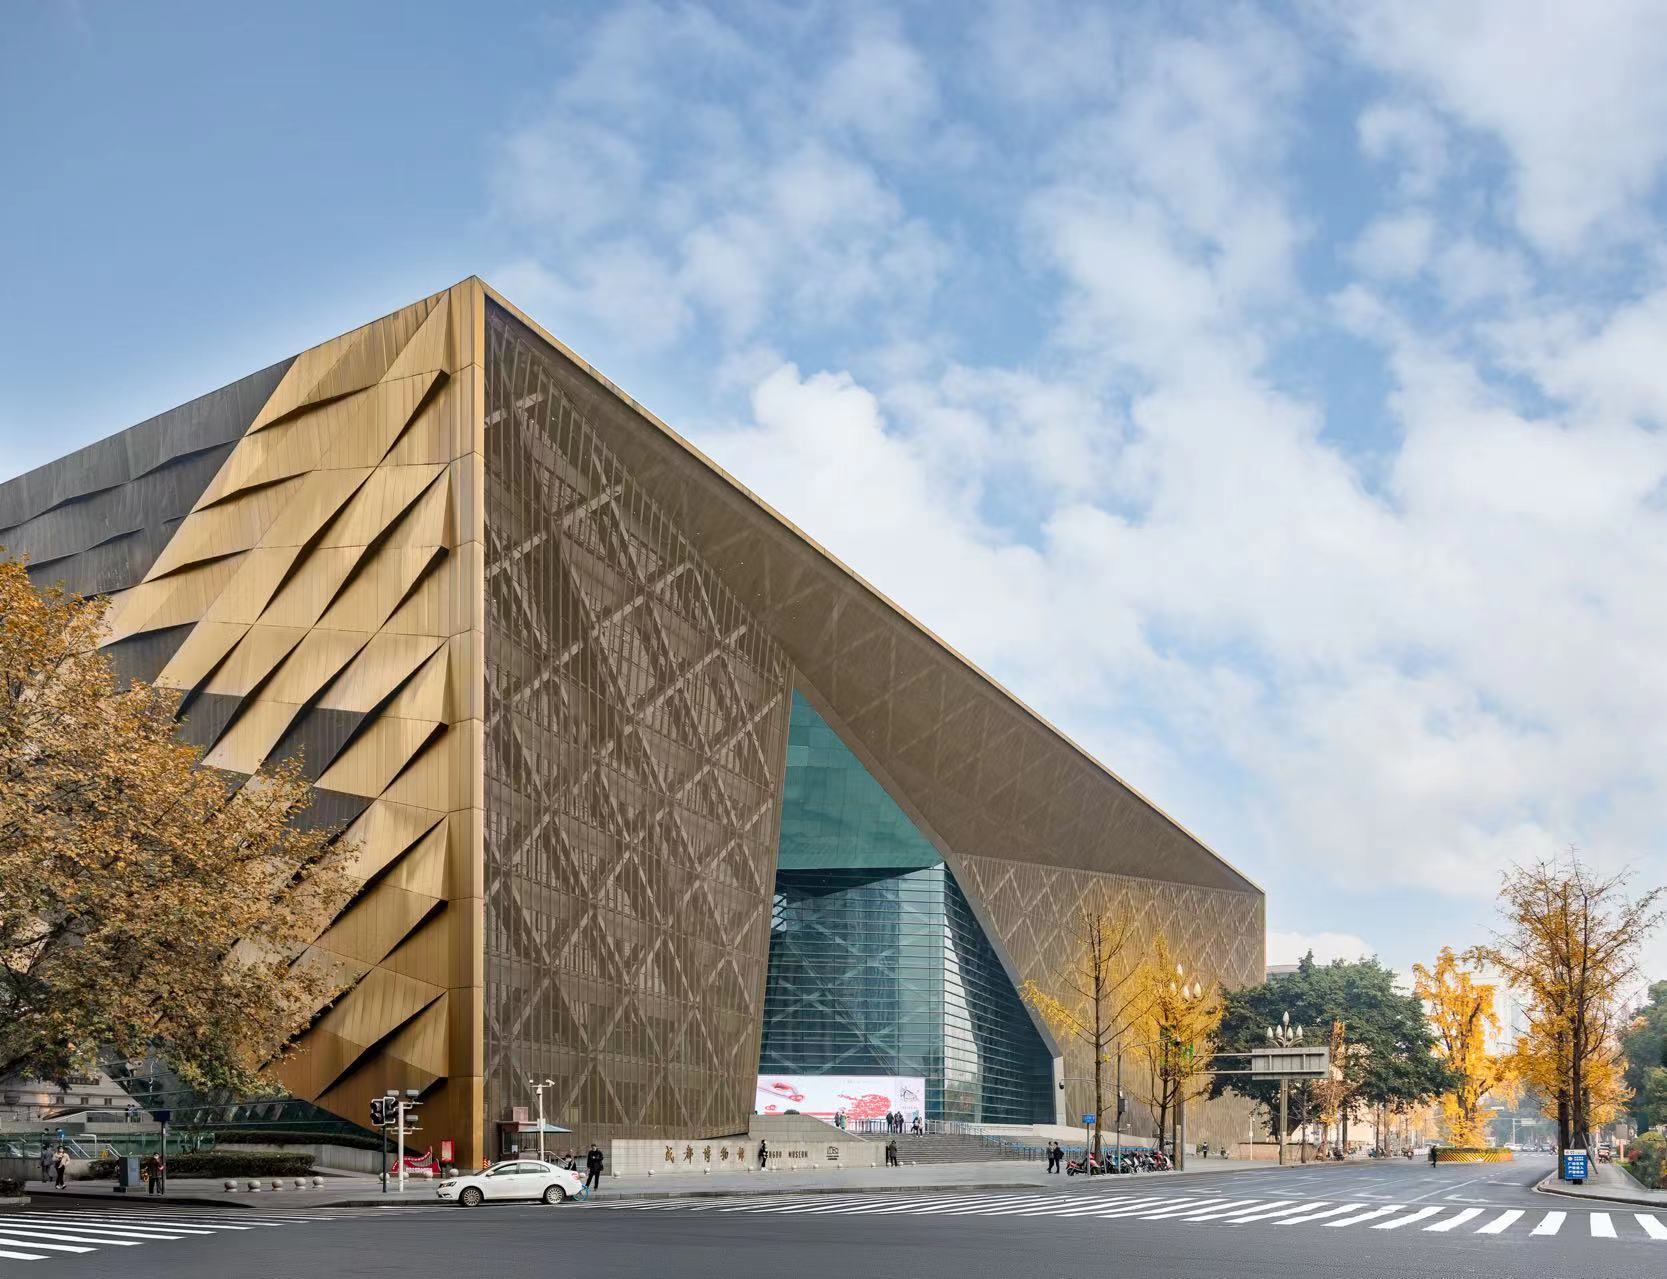 Chengdu Museum's path to international cooperation